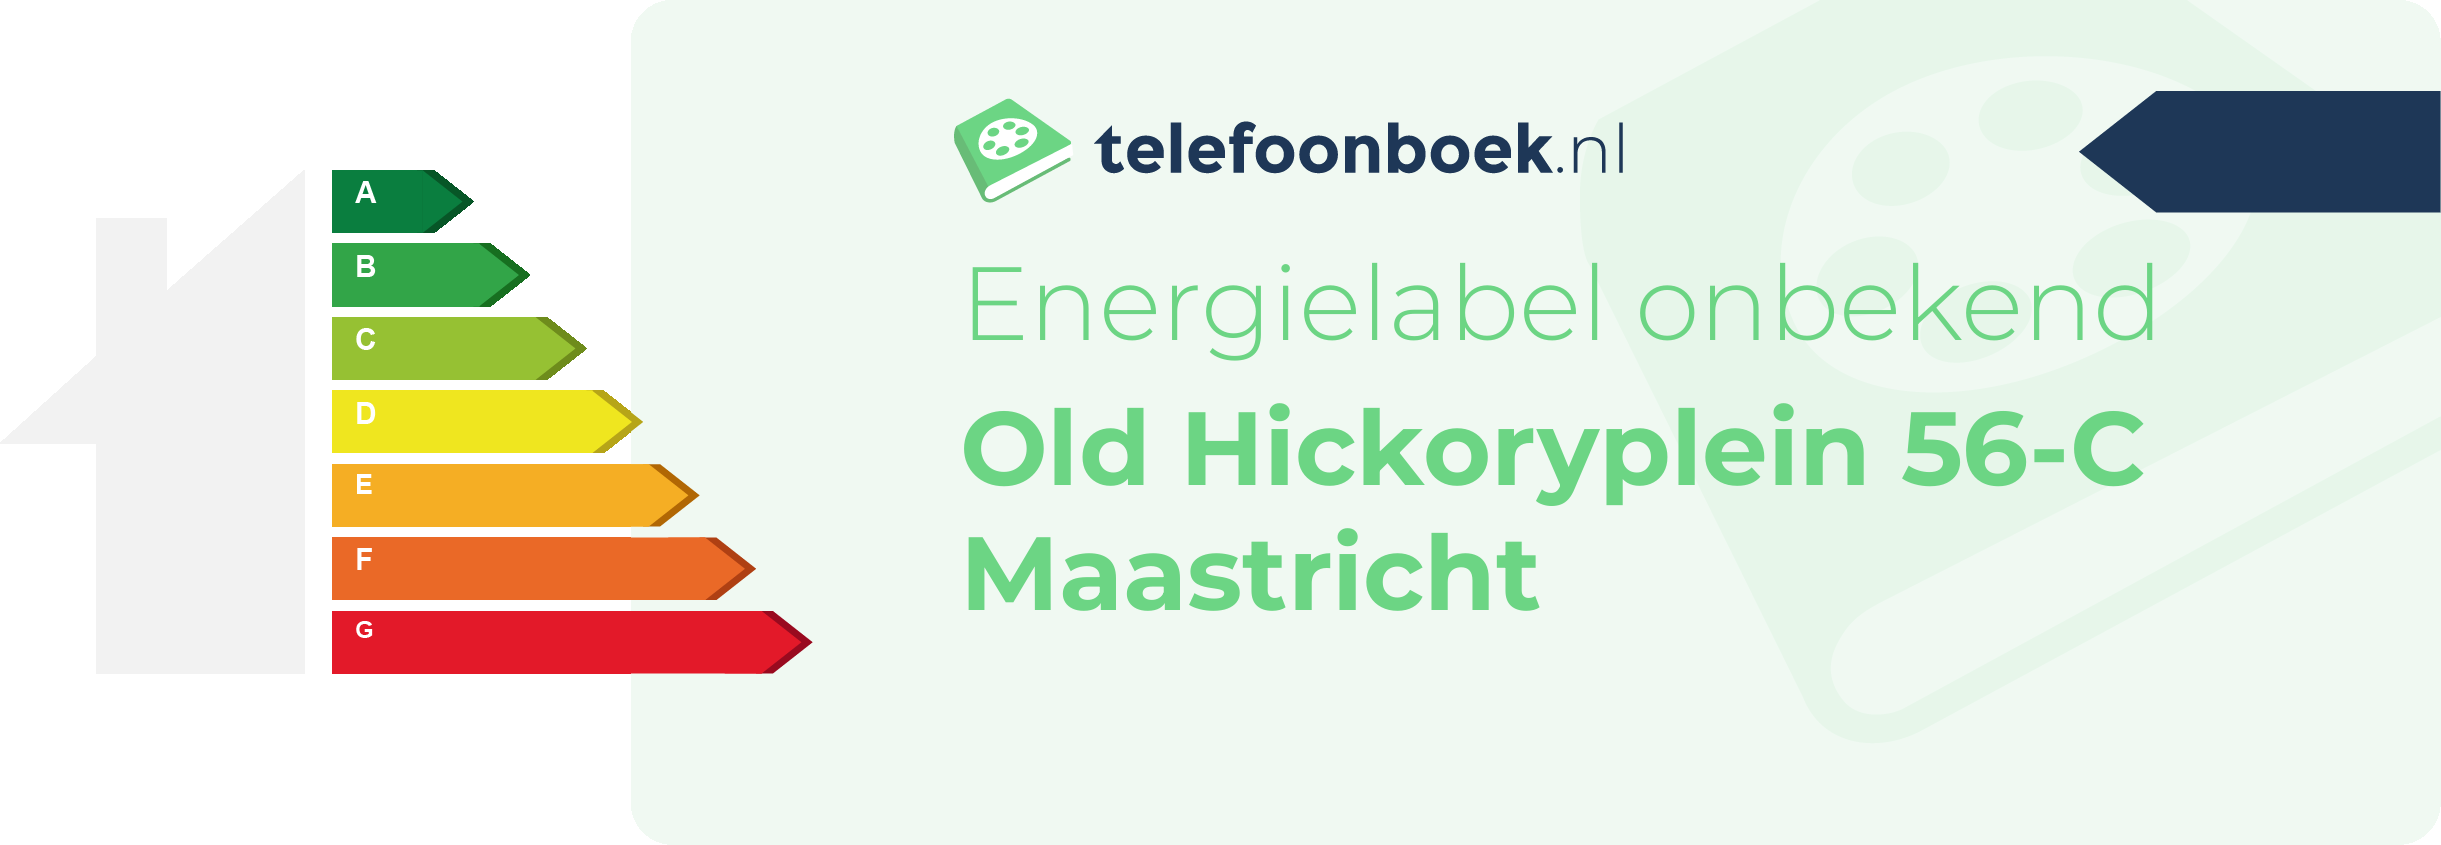 Energielabel Old Hickoryplein 56-C Maastricht